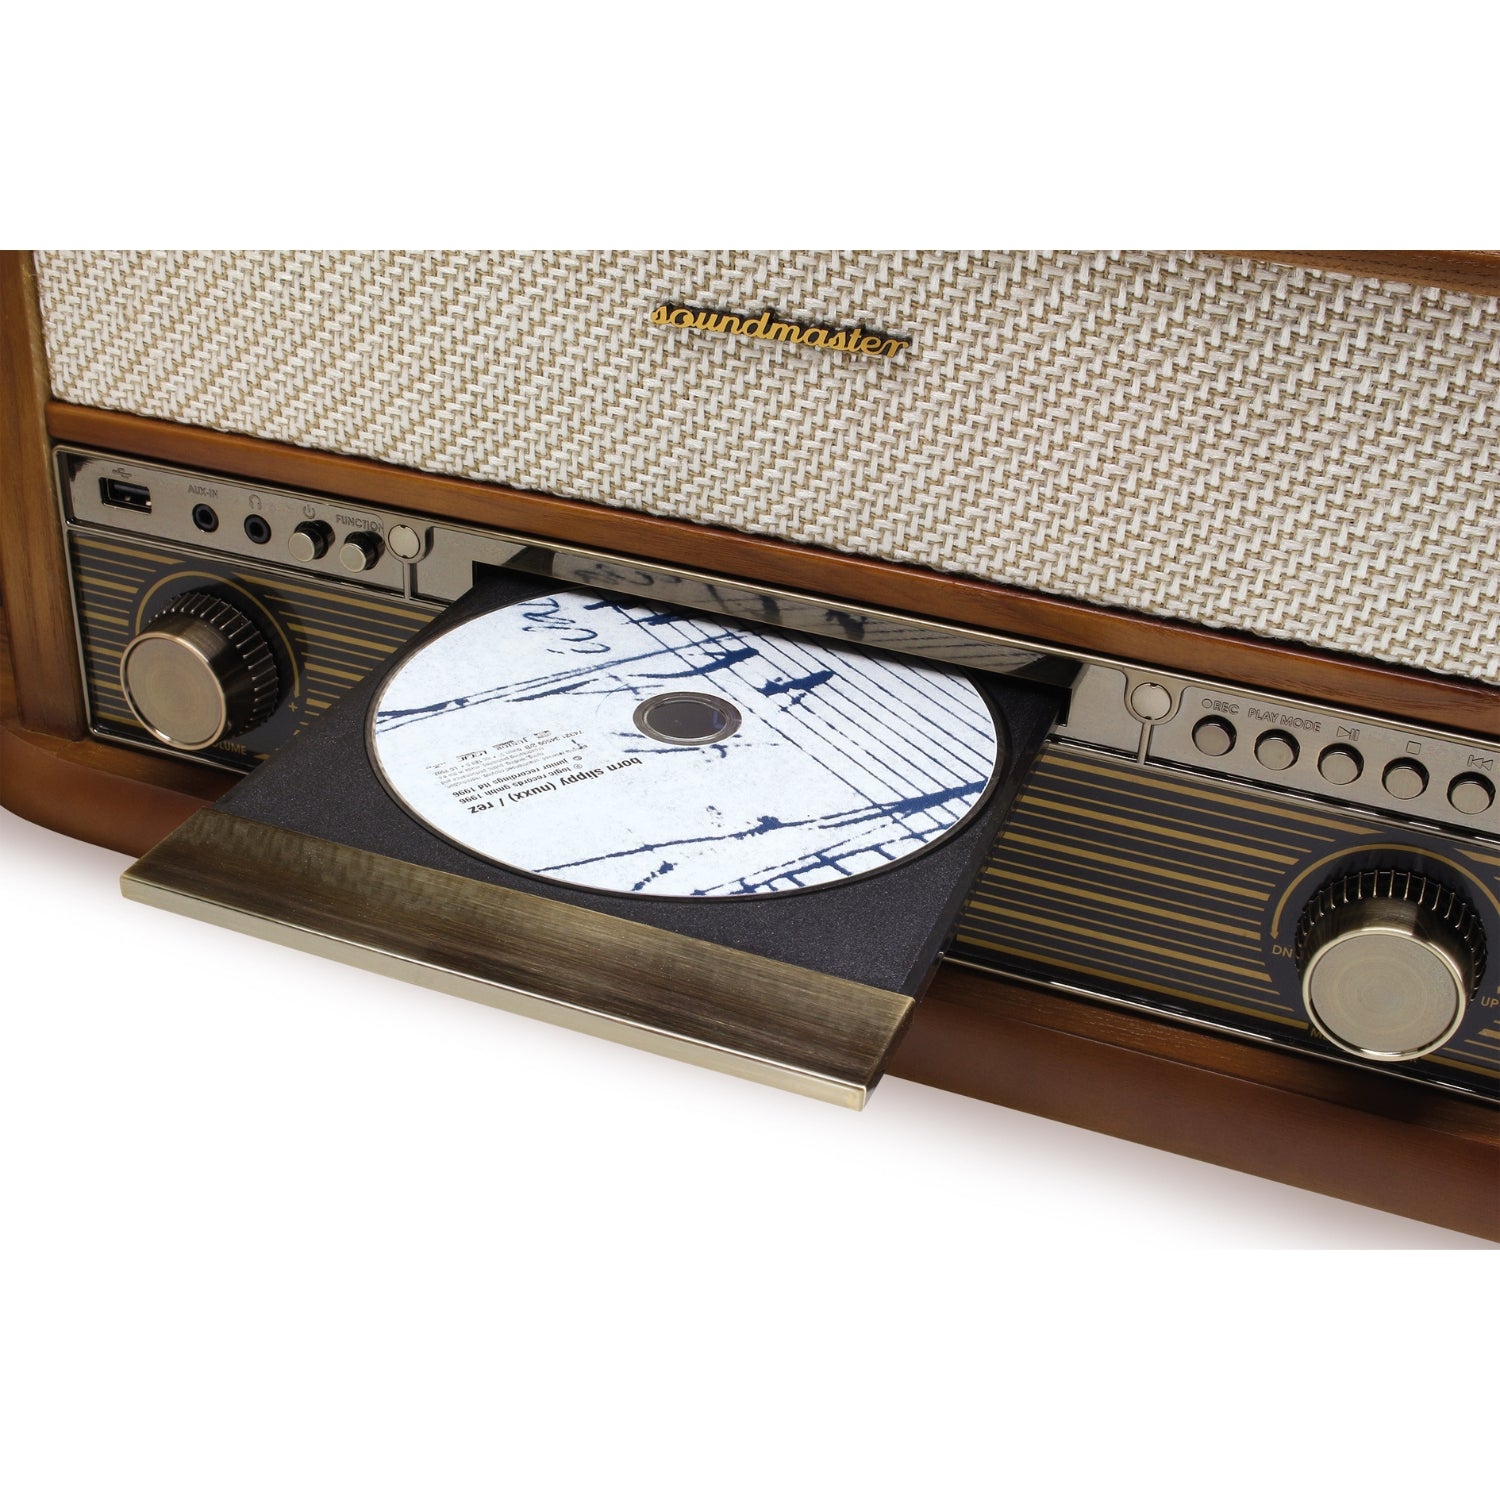 Soundmaster NR546BE Nostalgie Stereo DAB+/UKW Digitalradio mit Plattenspieler inkl Audio Technica Magnettonabnehmersystem, CD/MP3, USB, Kassette, Bluetooth und Encoding